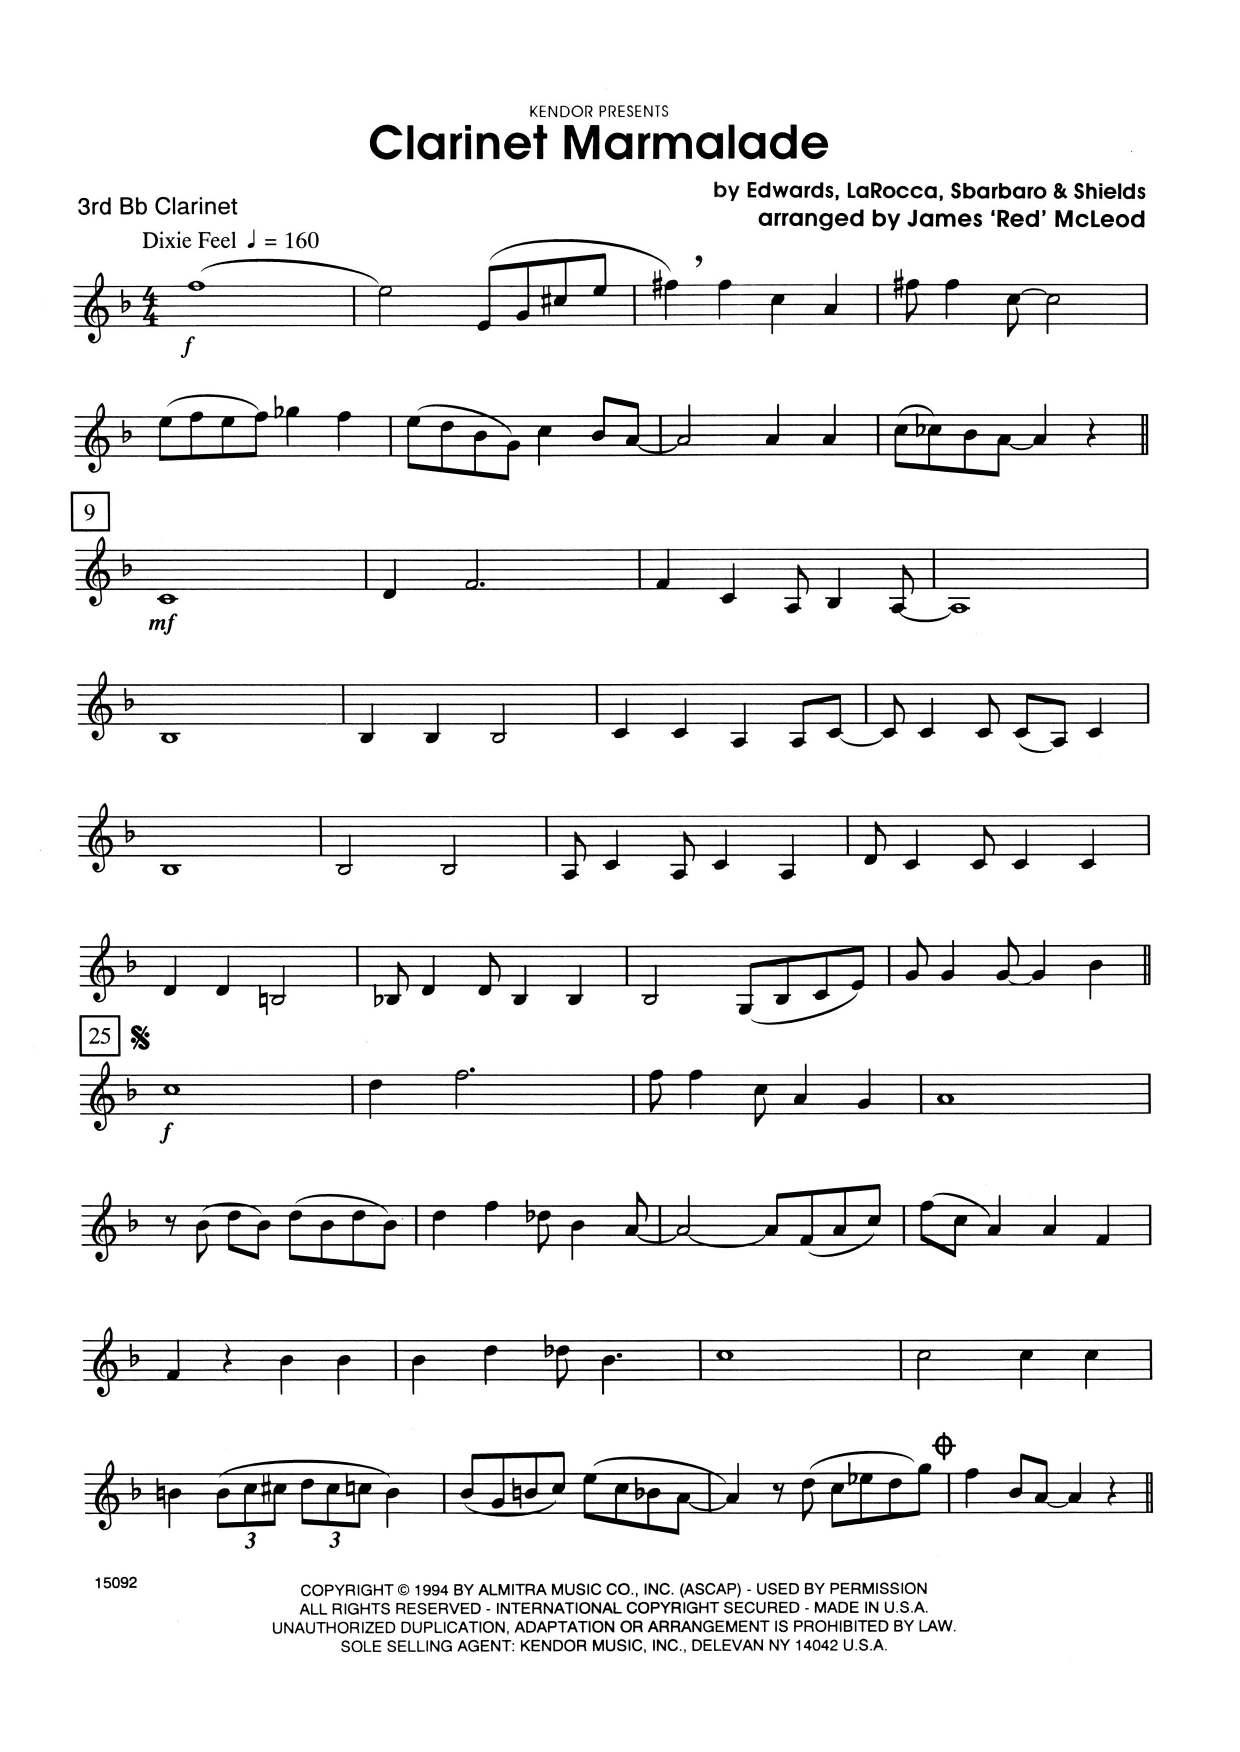 Download James 'Red' McLoud Clarinet Marmalade - 3rd Bb Clarinet Sheet Music